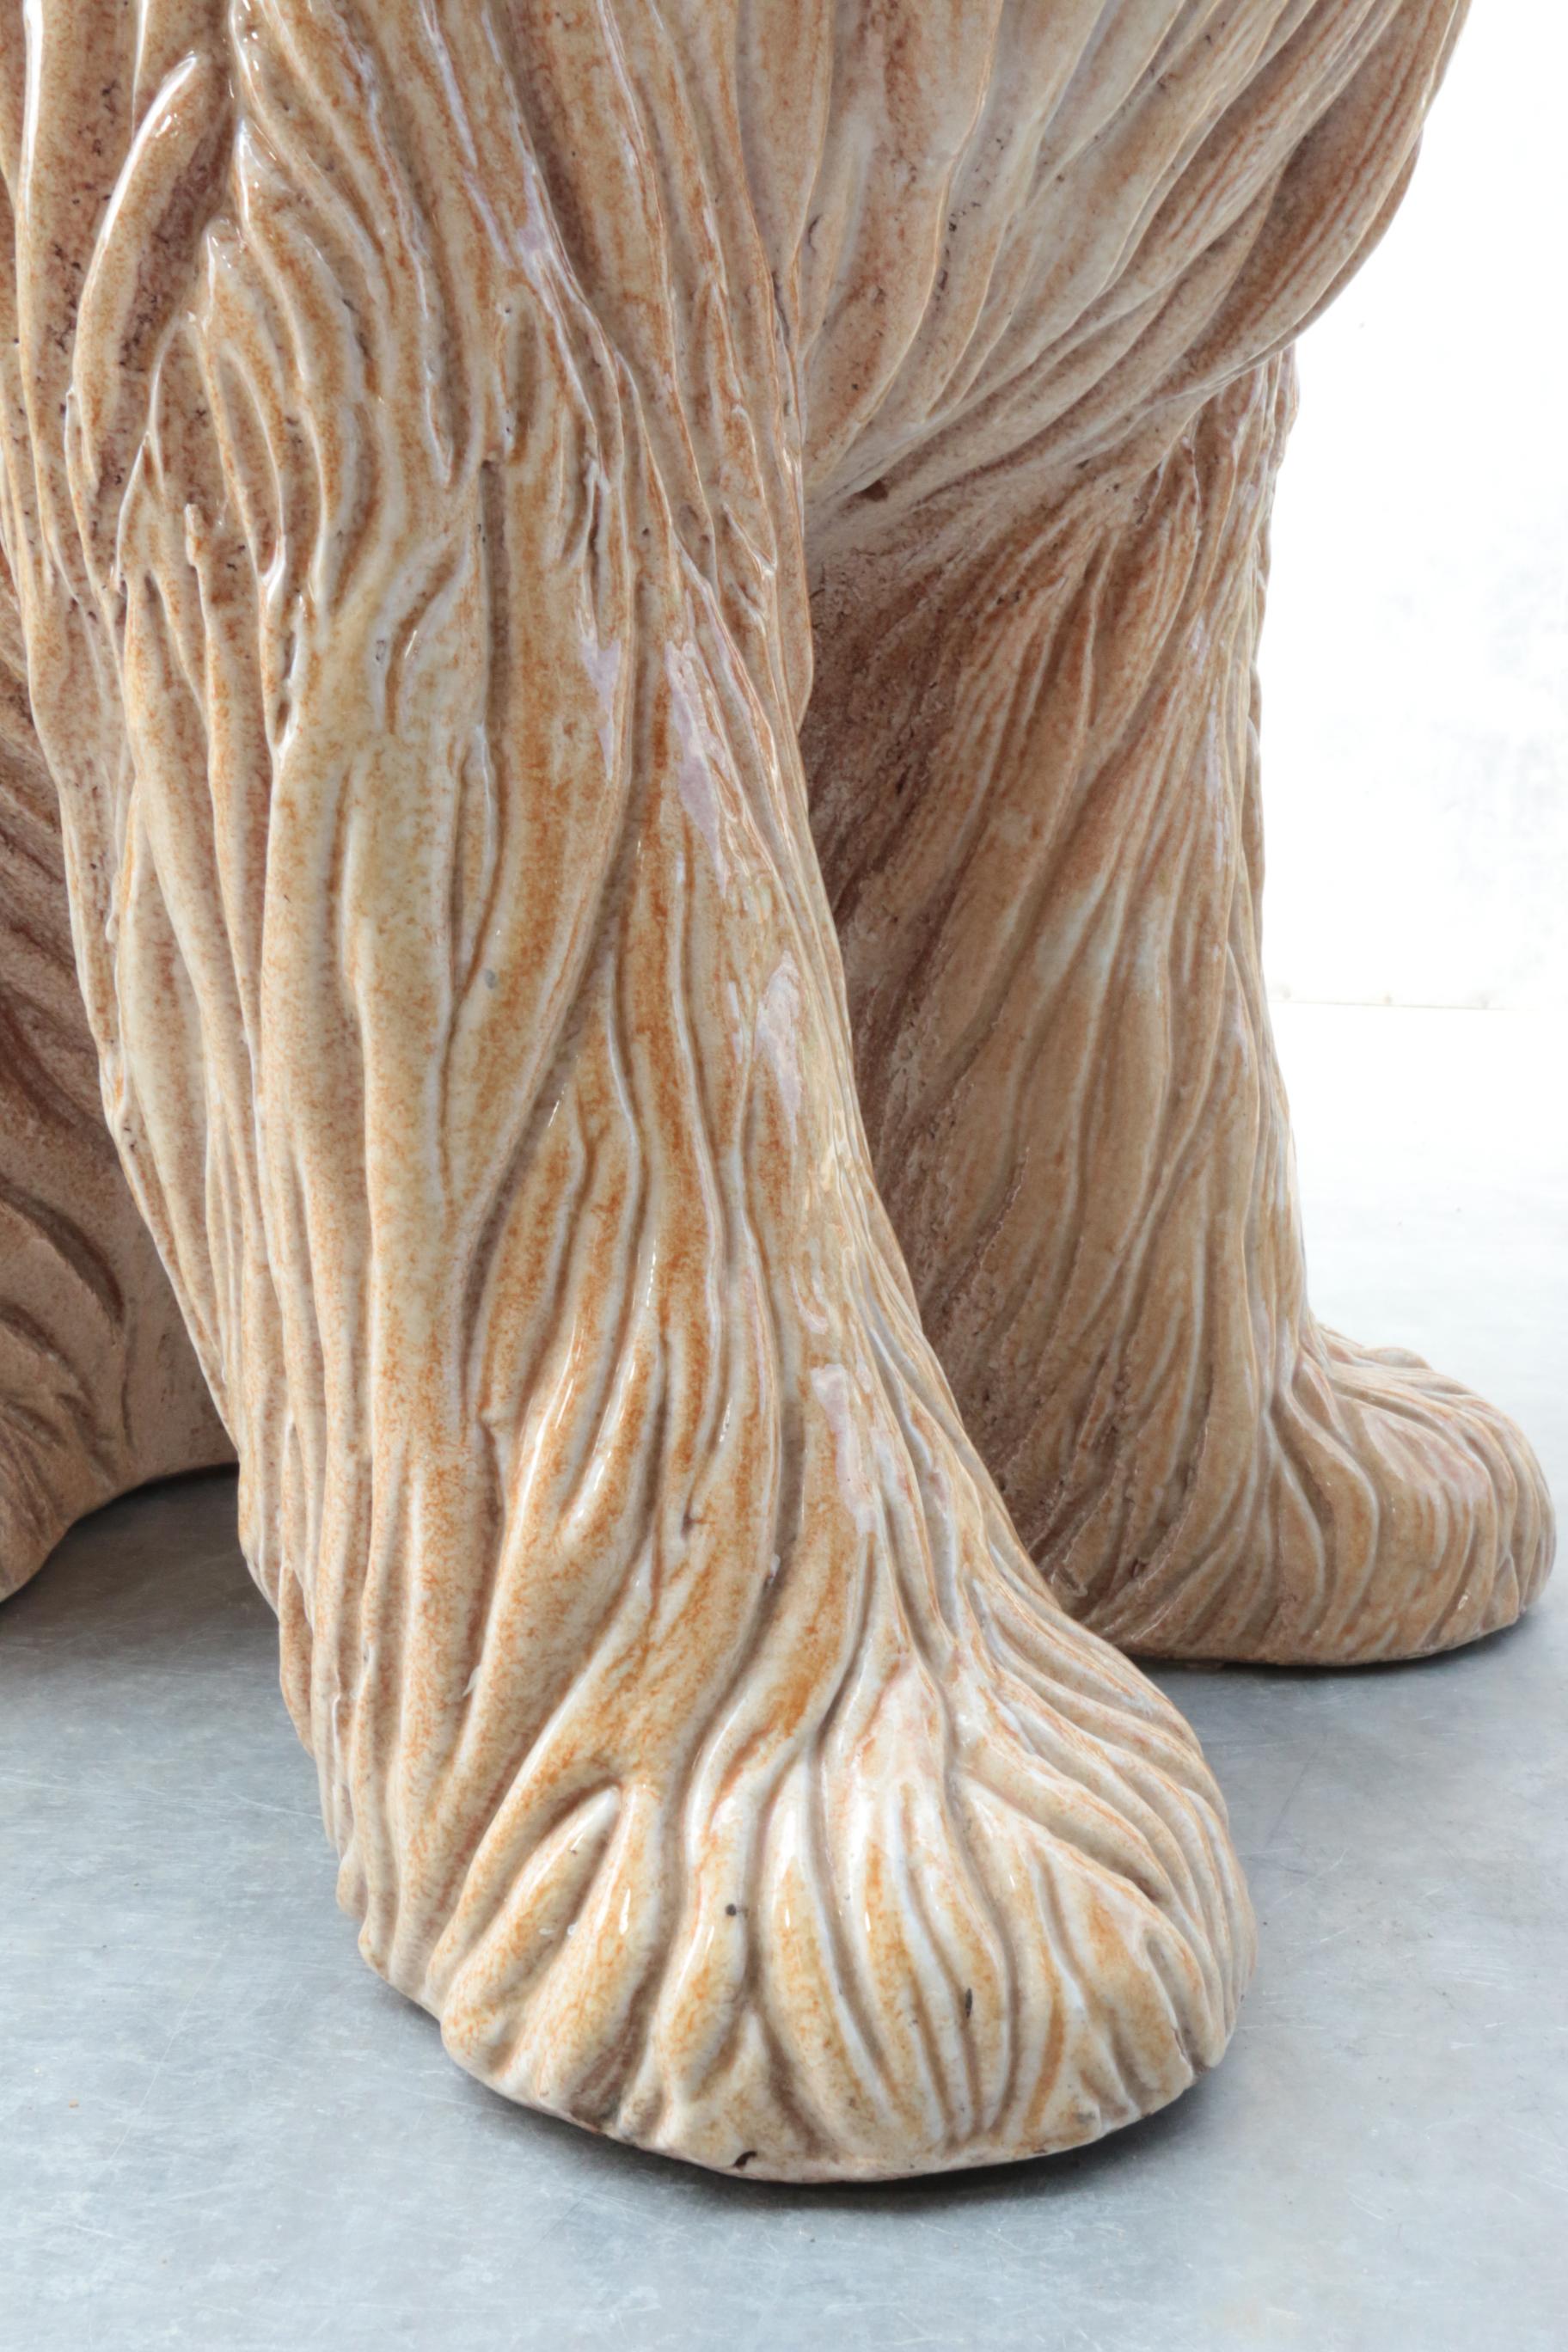 afghan hound figurine